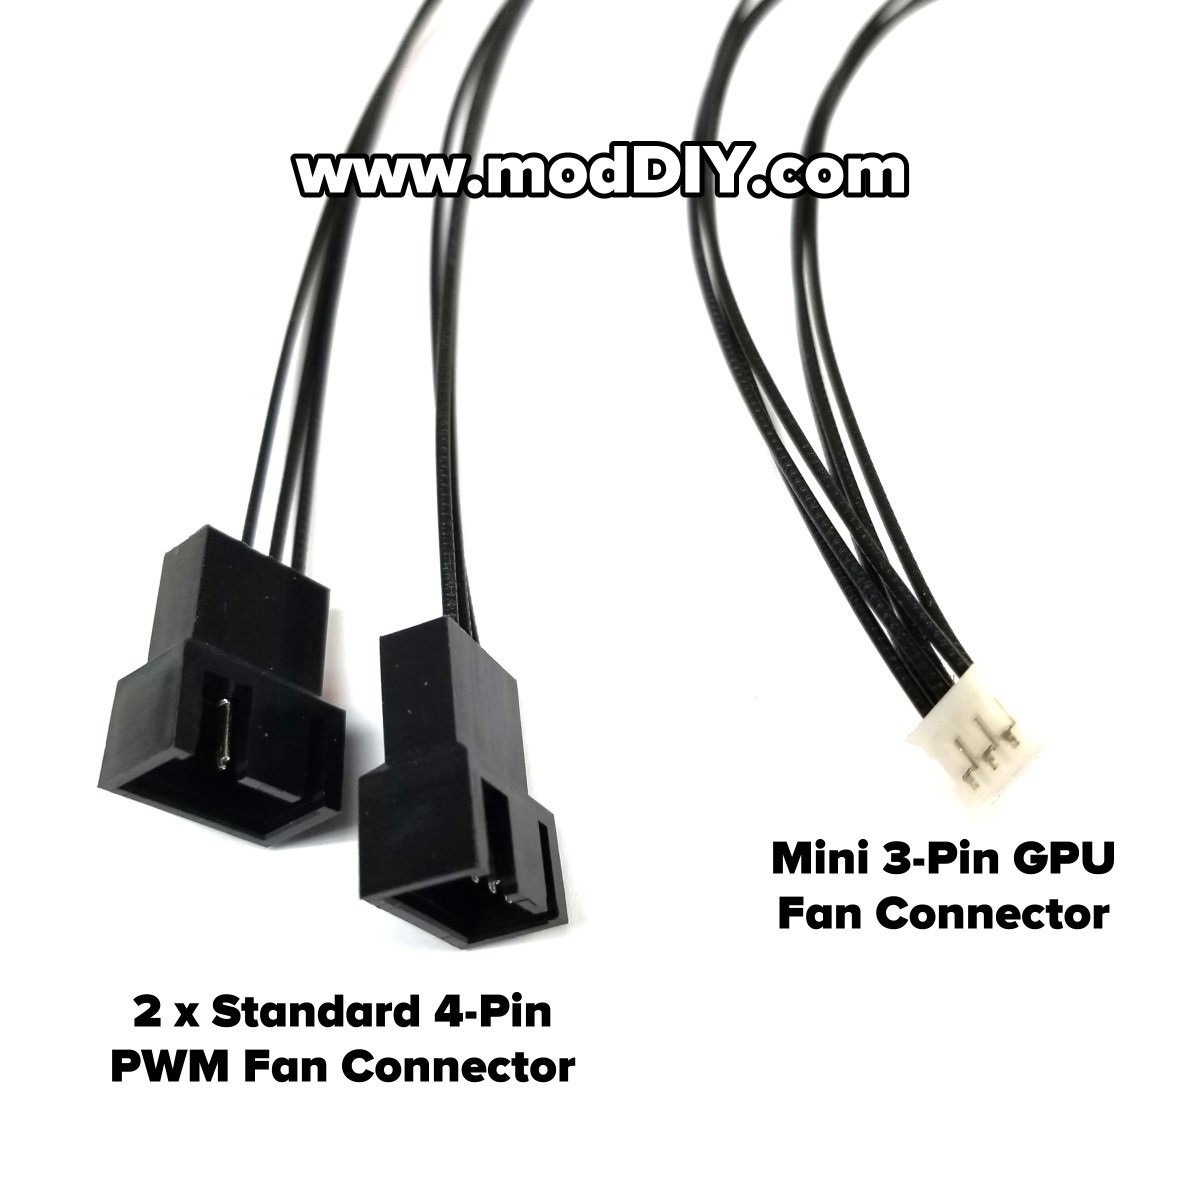 3 Pin GPU Mini Fan Connector to 2 x Standard 4 Pin PWM Adapter Cable